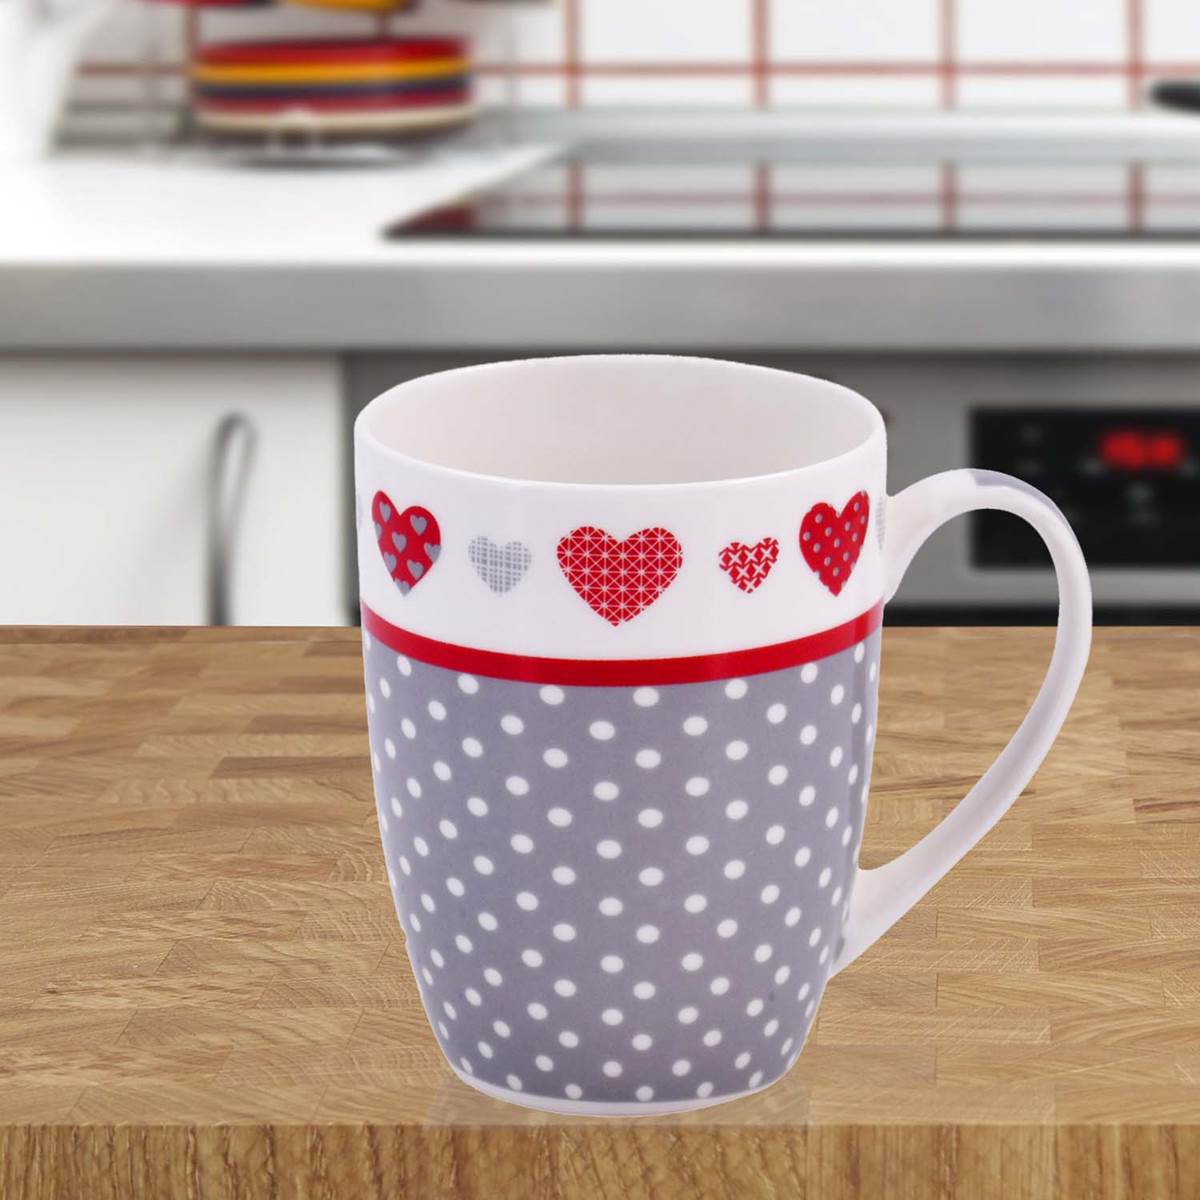 Printed Ceramic Coffee or Tea Mug with handle - 325ml (3788G-D)